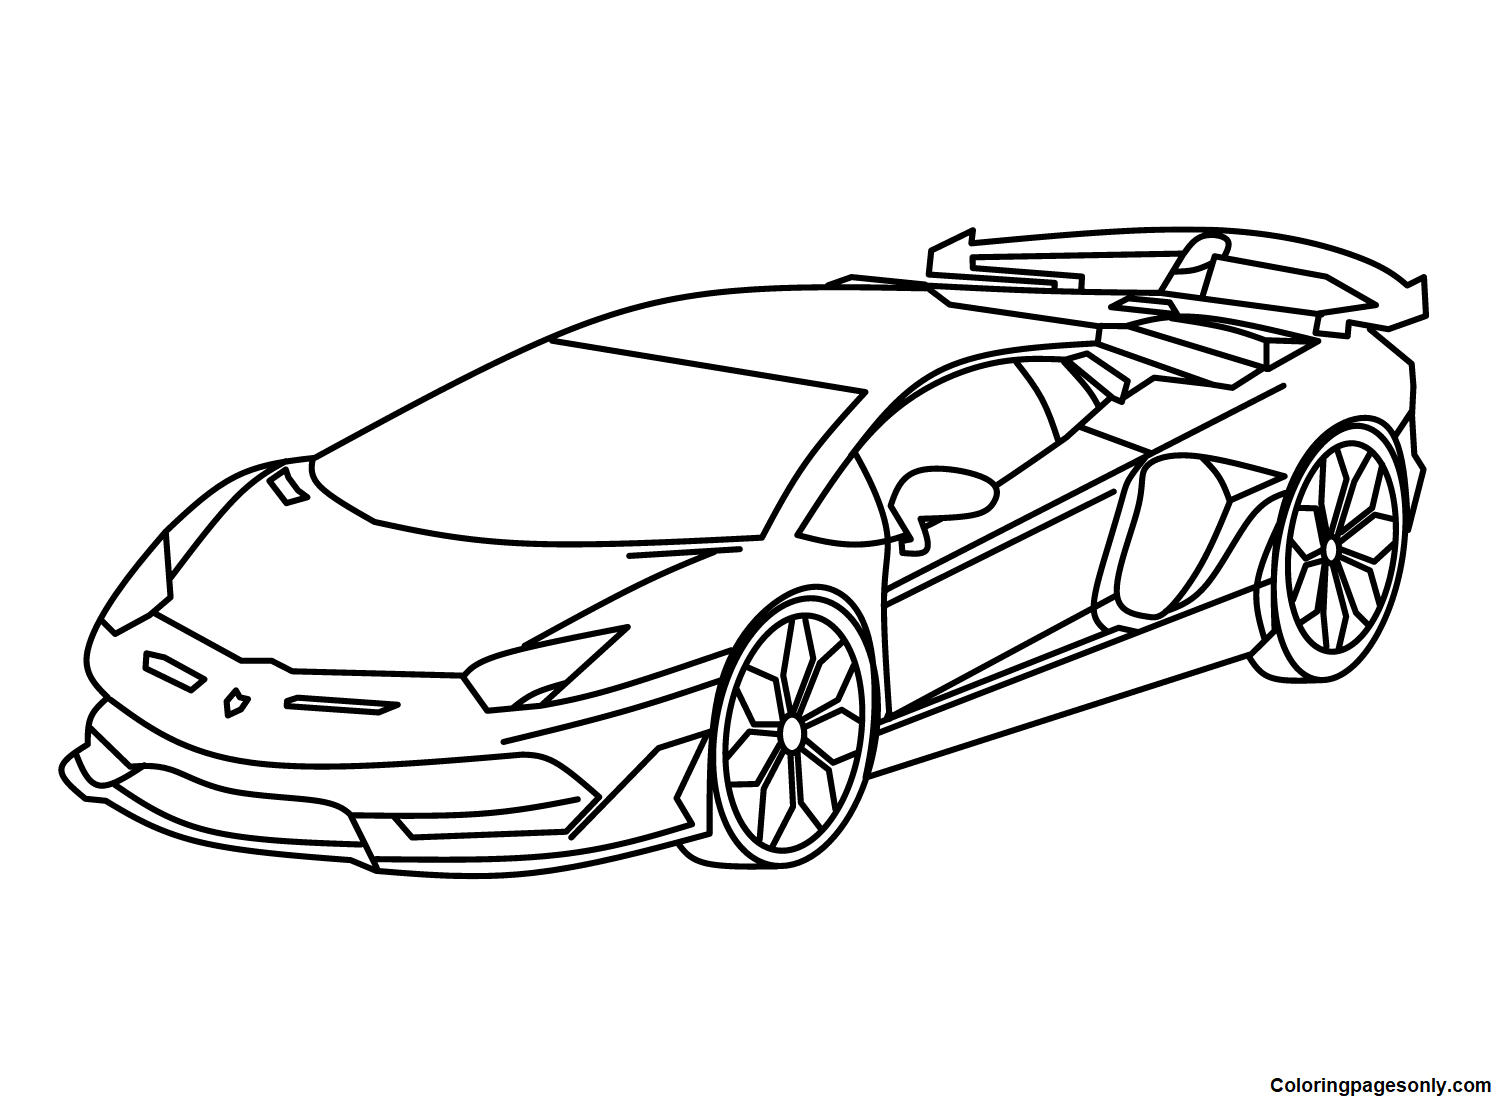 Dibujo de Lamborghini para imprimir para colorear